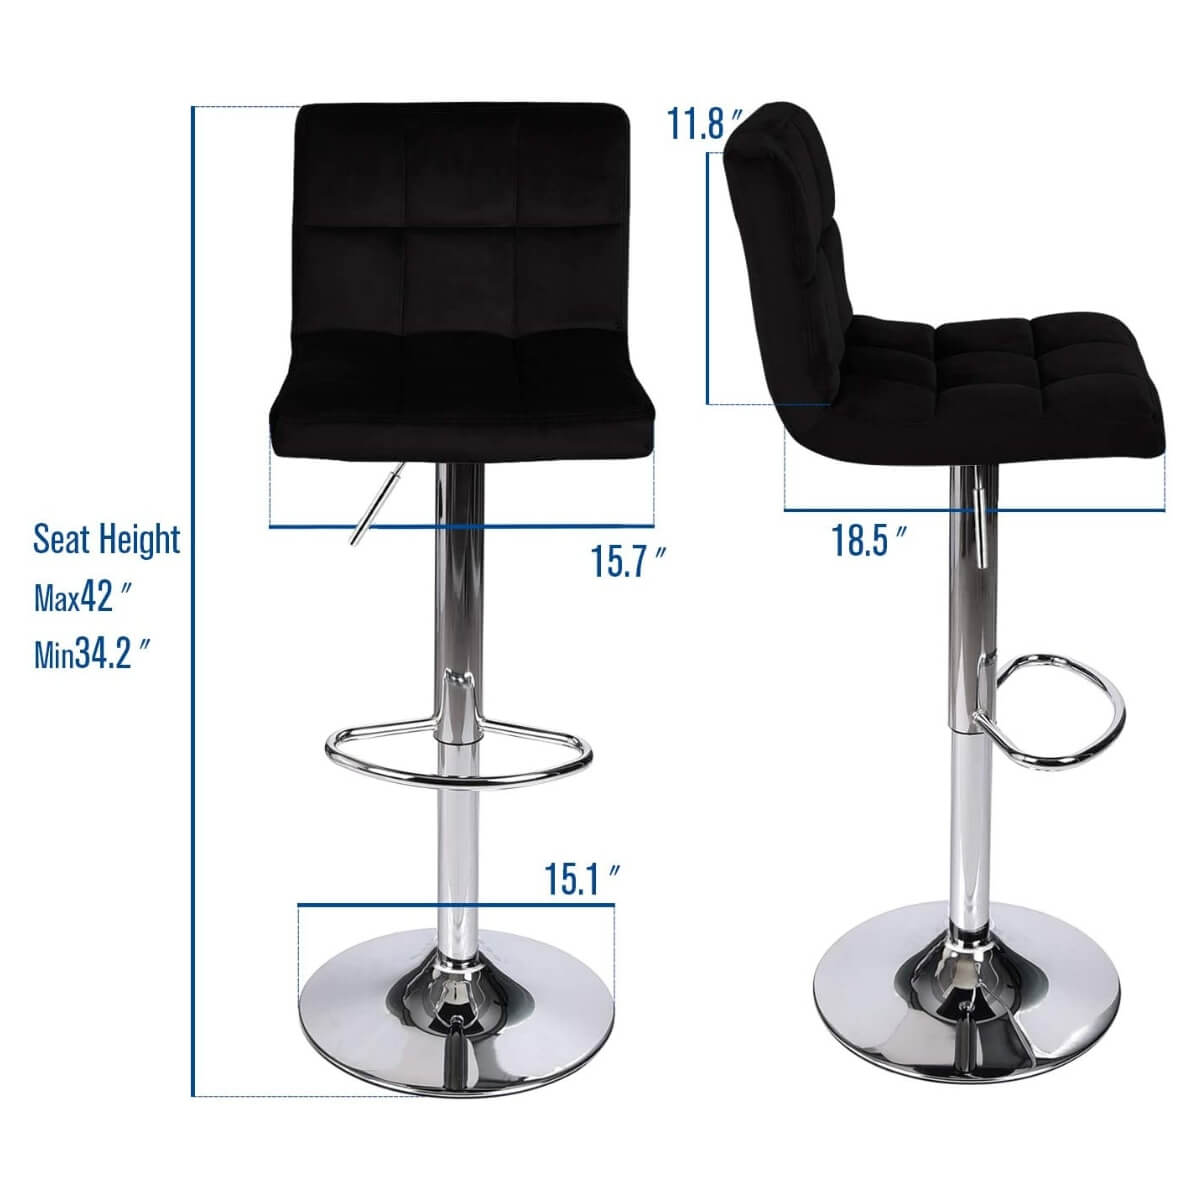 Black velvet fabric bar stools size